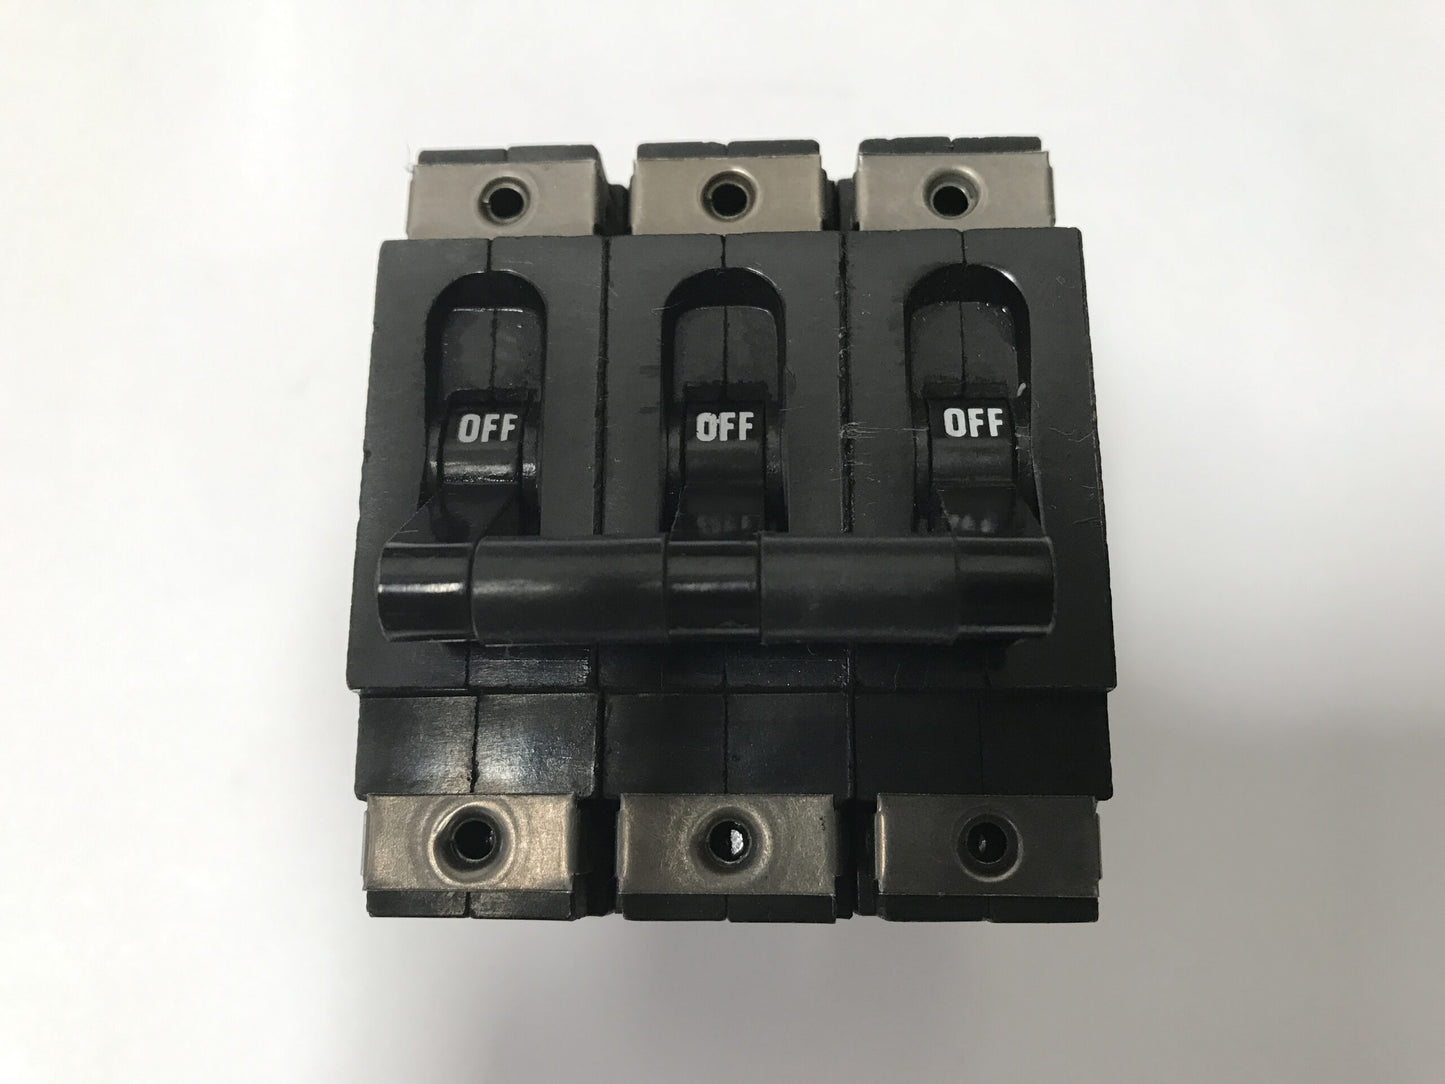 EINEMANN am3-a3-a (circuit breaker) 30amp